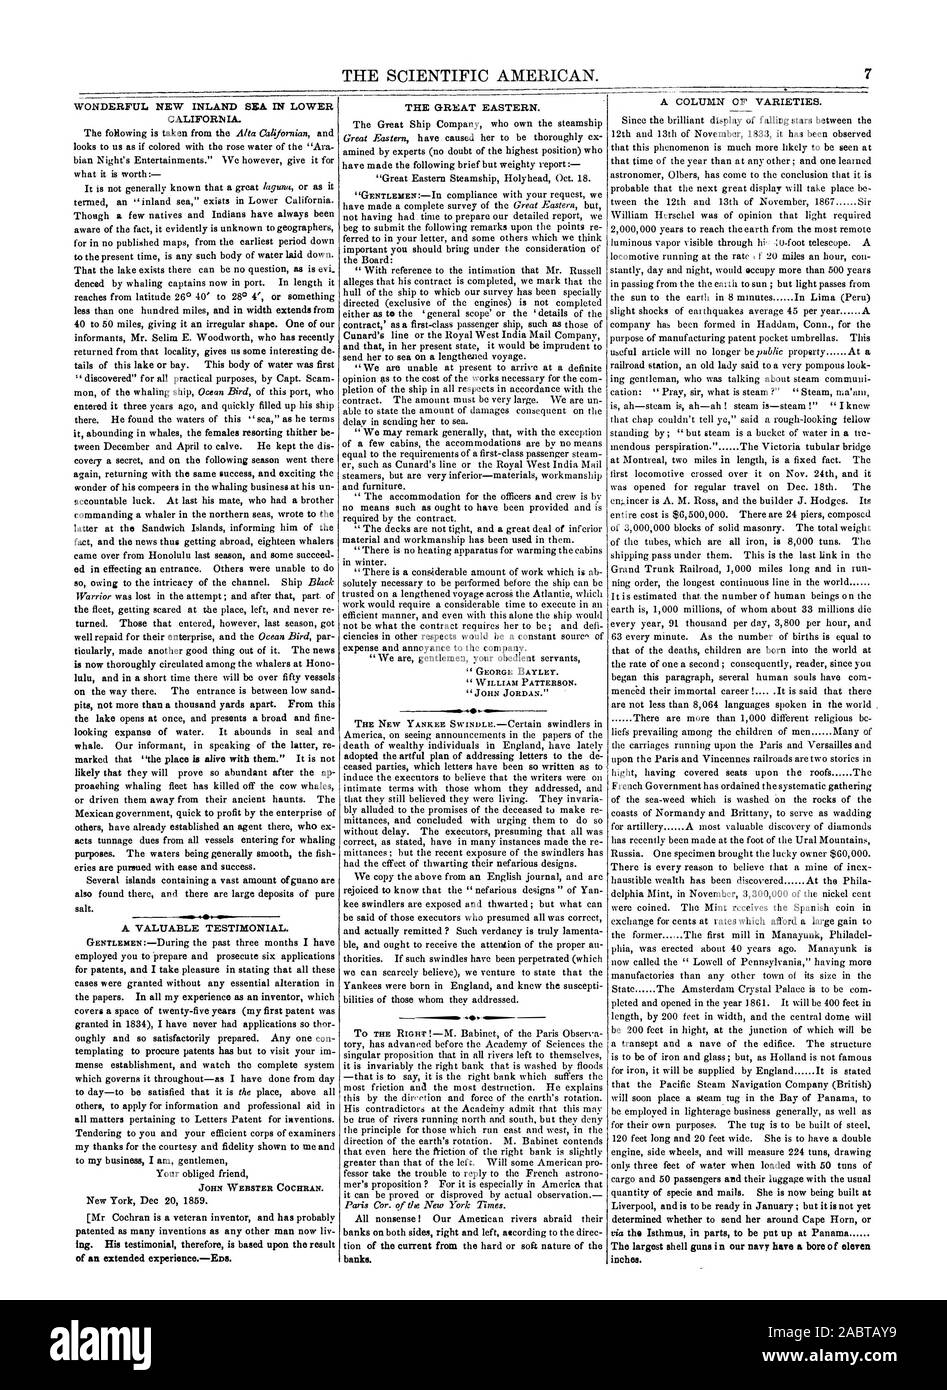 Der Scientific American. 7 JOHN WEBSTER COCHRAN. 'GEORGE BAYLEY. "WILLIAM PATTERSON. 'JOHN JORDAN." Zoll., 1860-01-02 Stockfoto